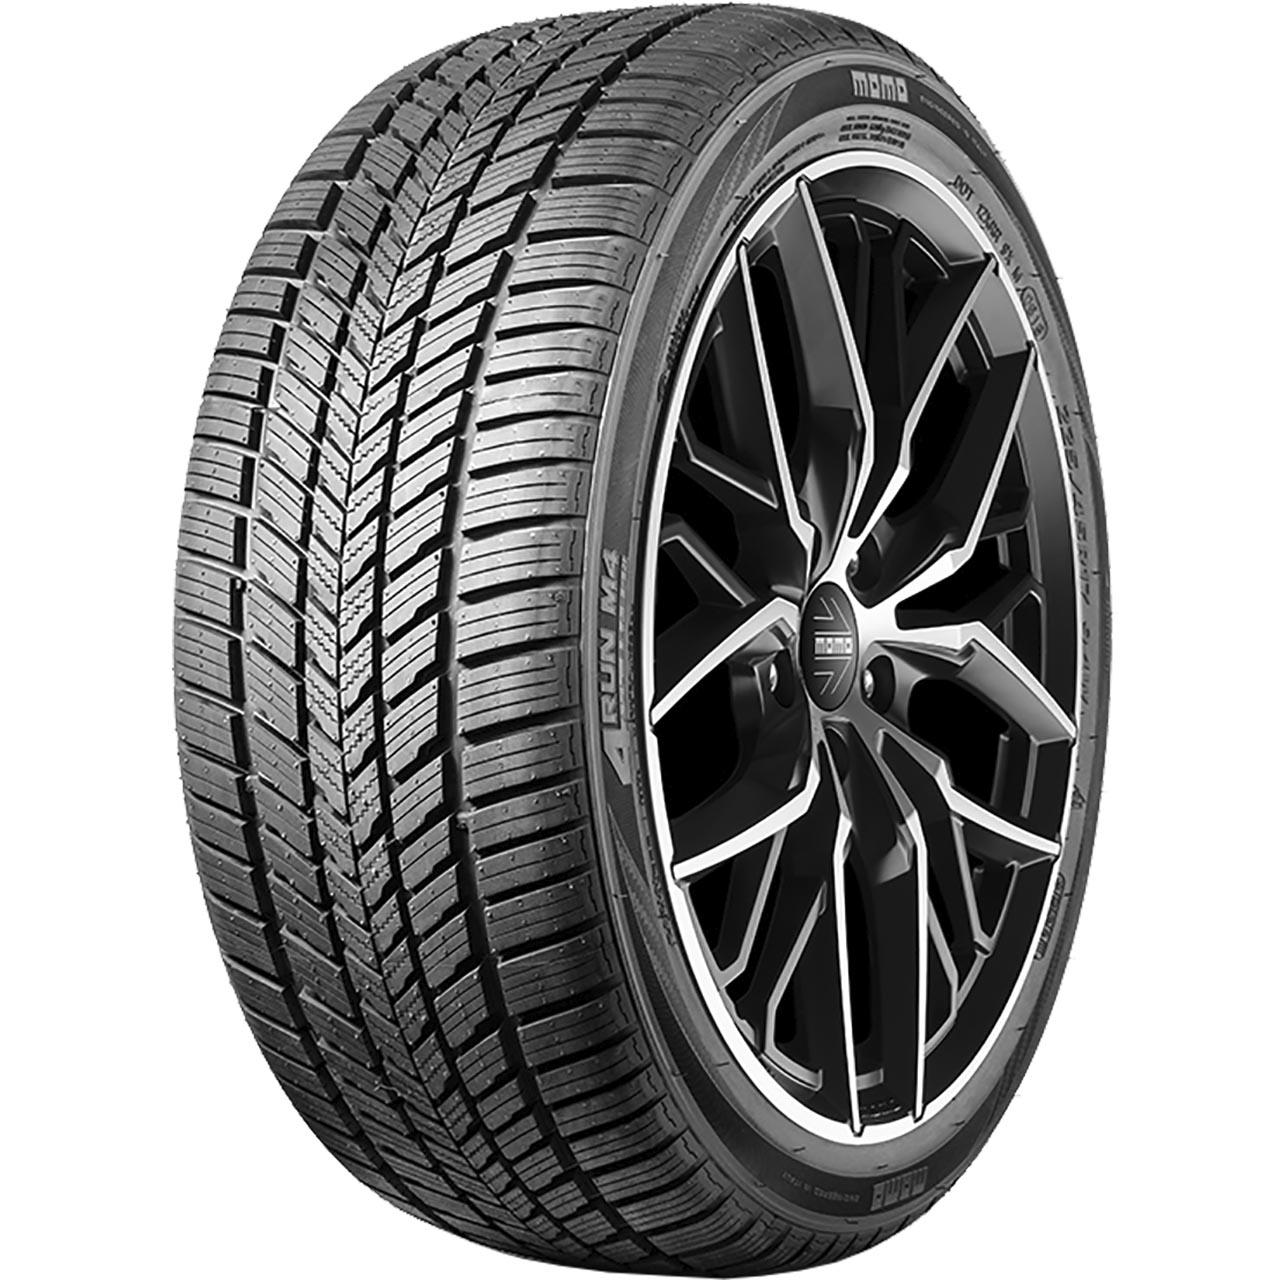 Momo Tire M 4 Four Season 245/45R19 98W